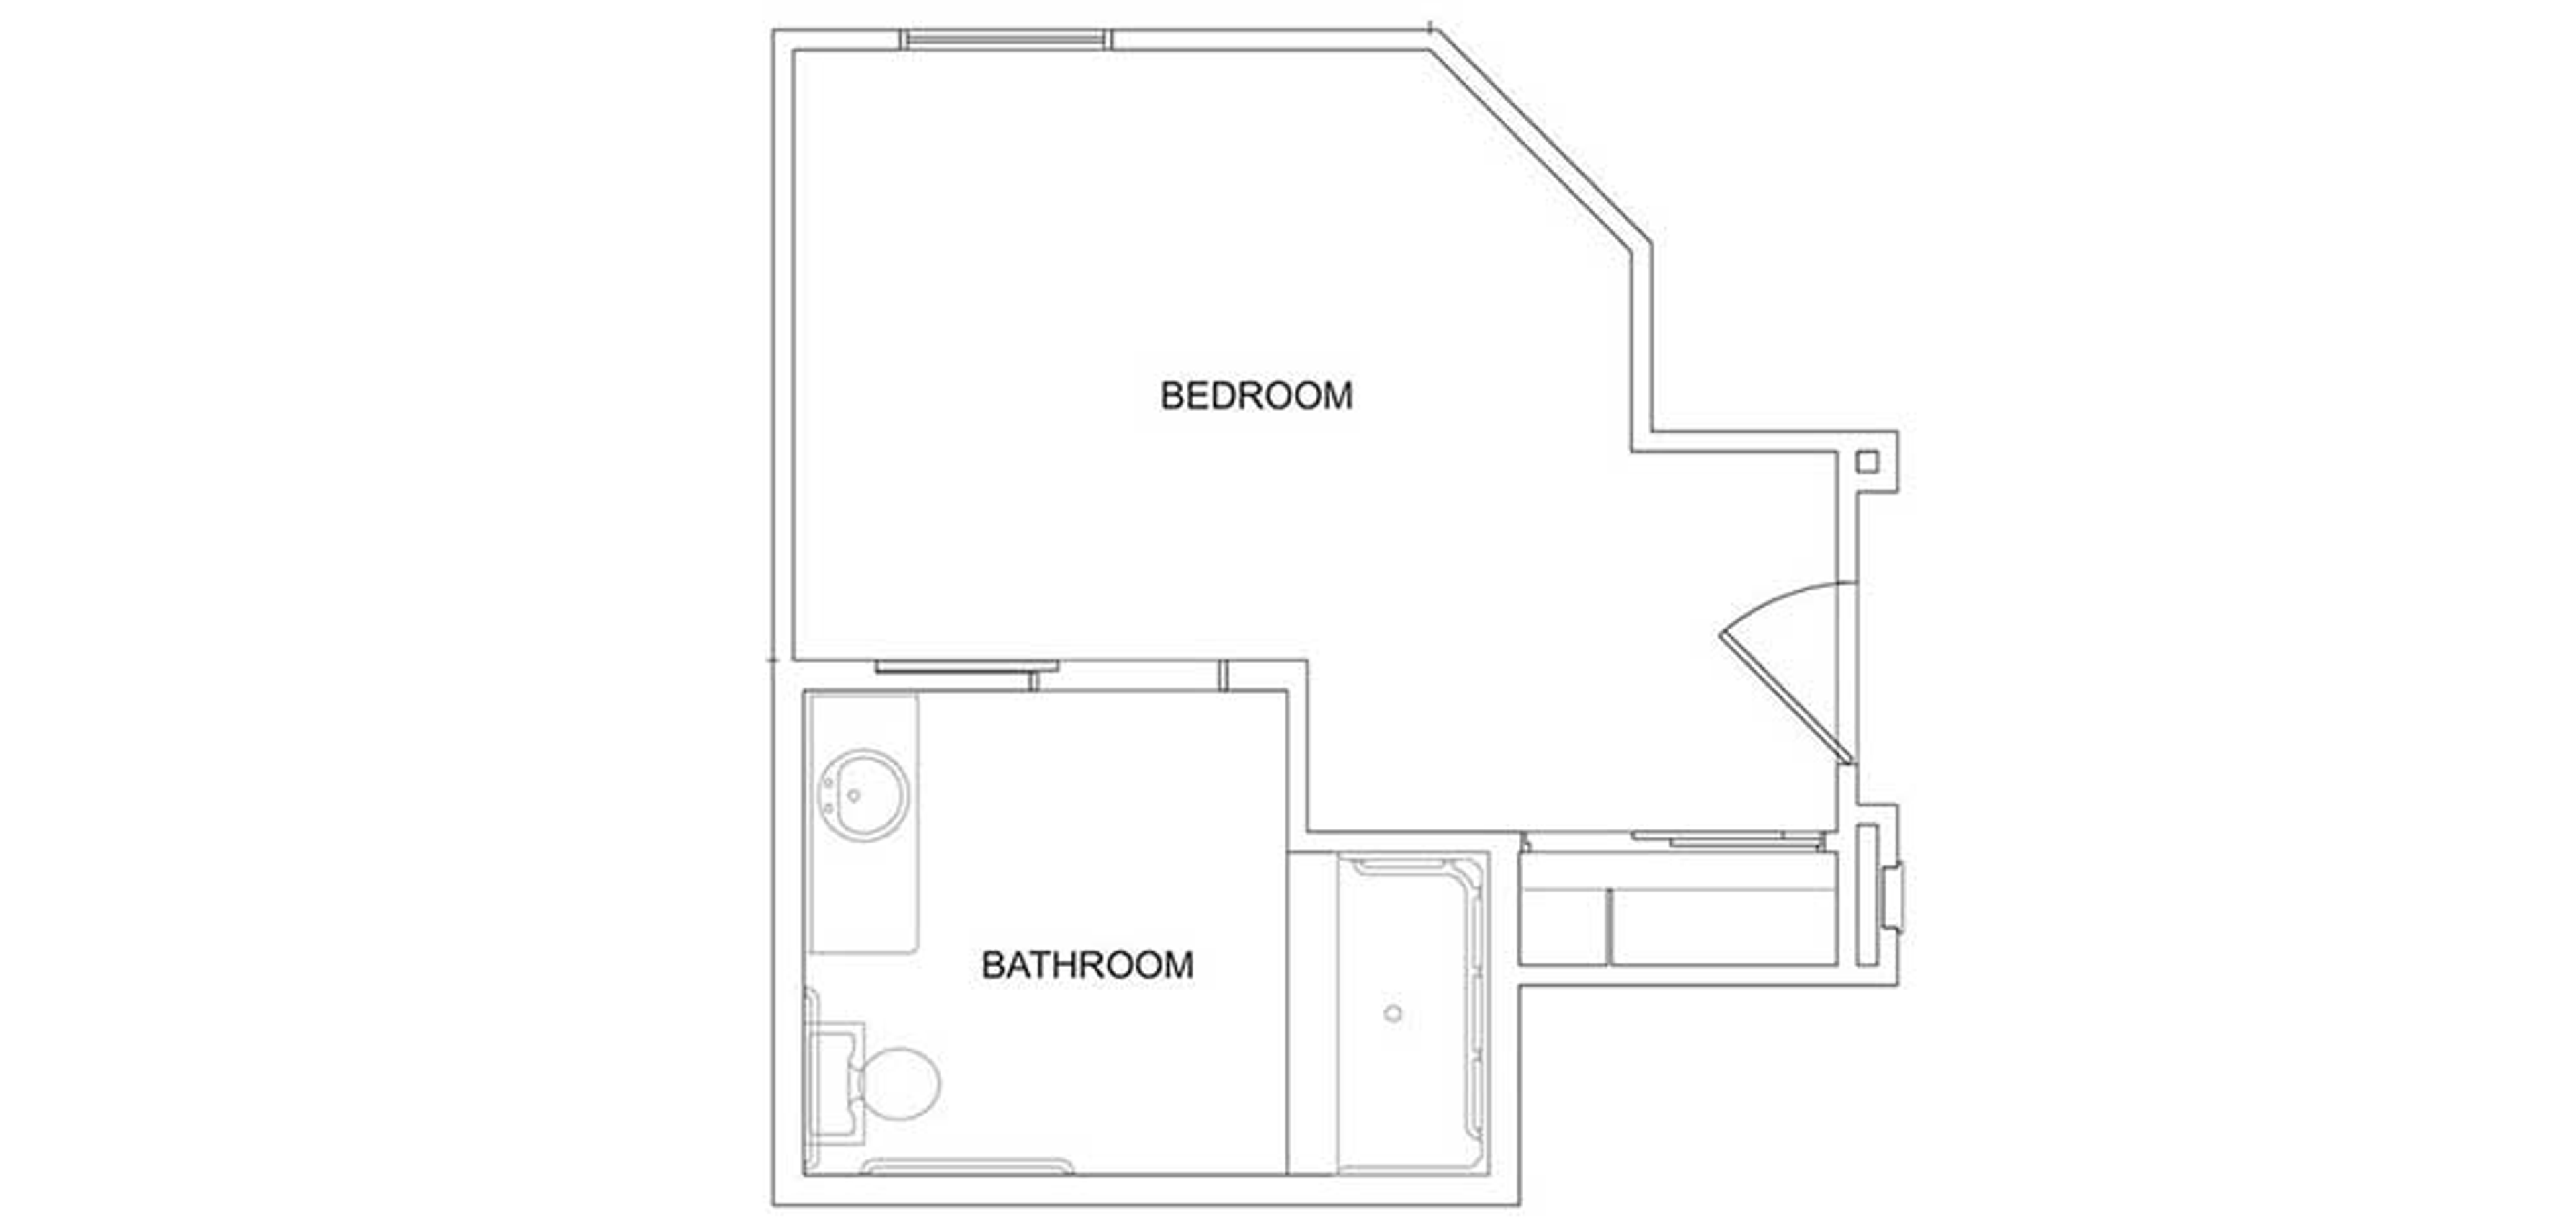 Floorplan - Pecan Pointe - 1 bed, 1 bath, Studio, Private Memory Care